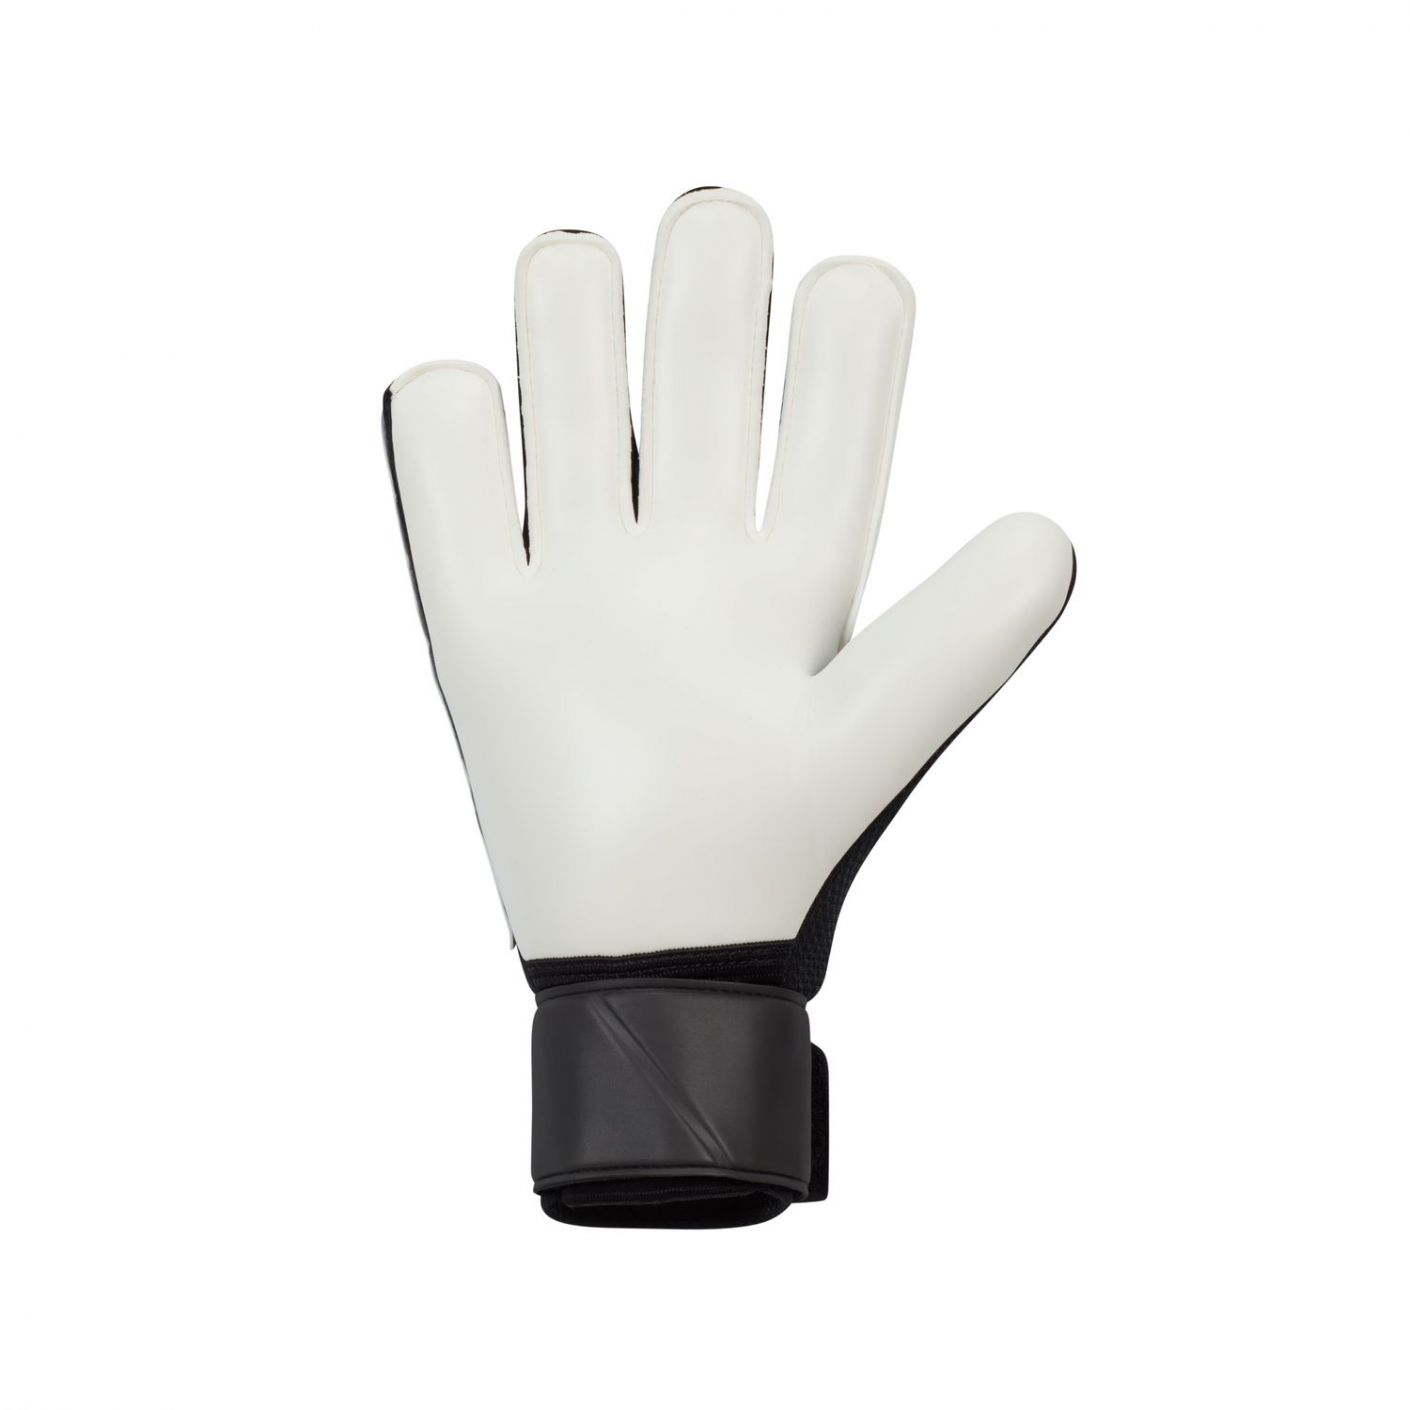 Nike Gloves Match Black/Dark Grey/White